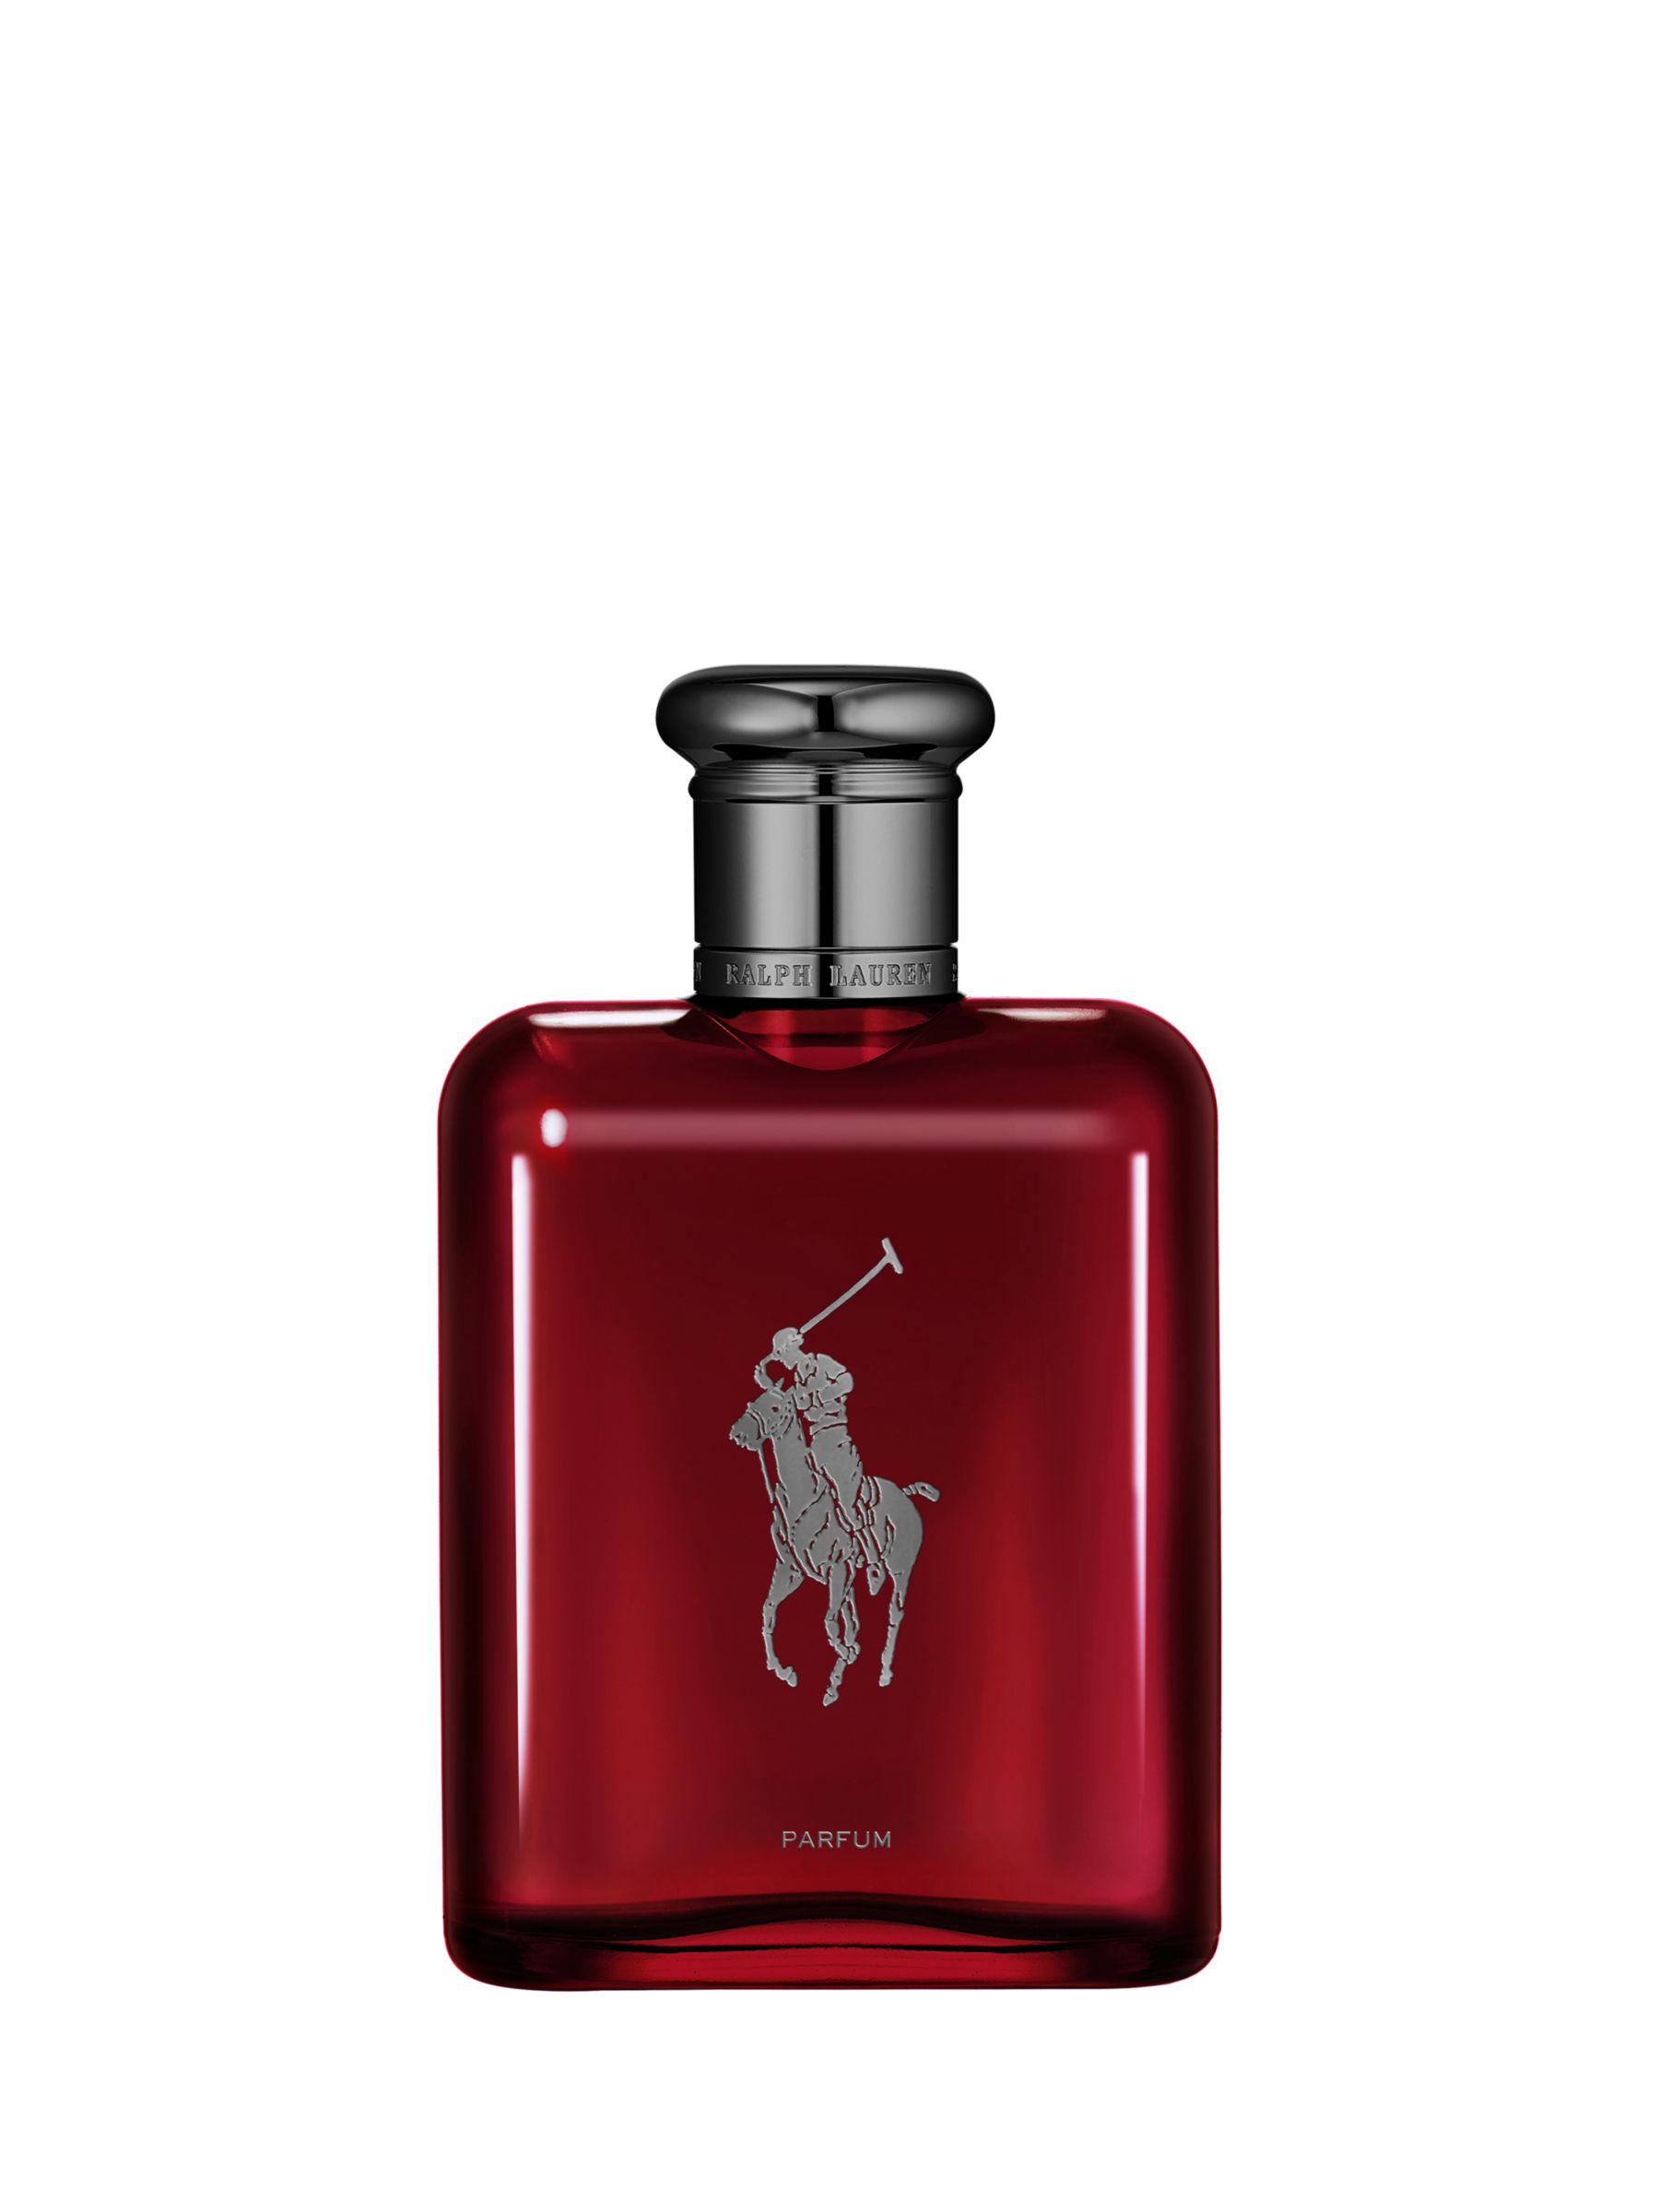 Ralph Lauren Polo Red Parfum, 125ml at John Lewis & Partners